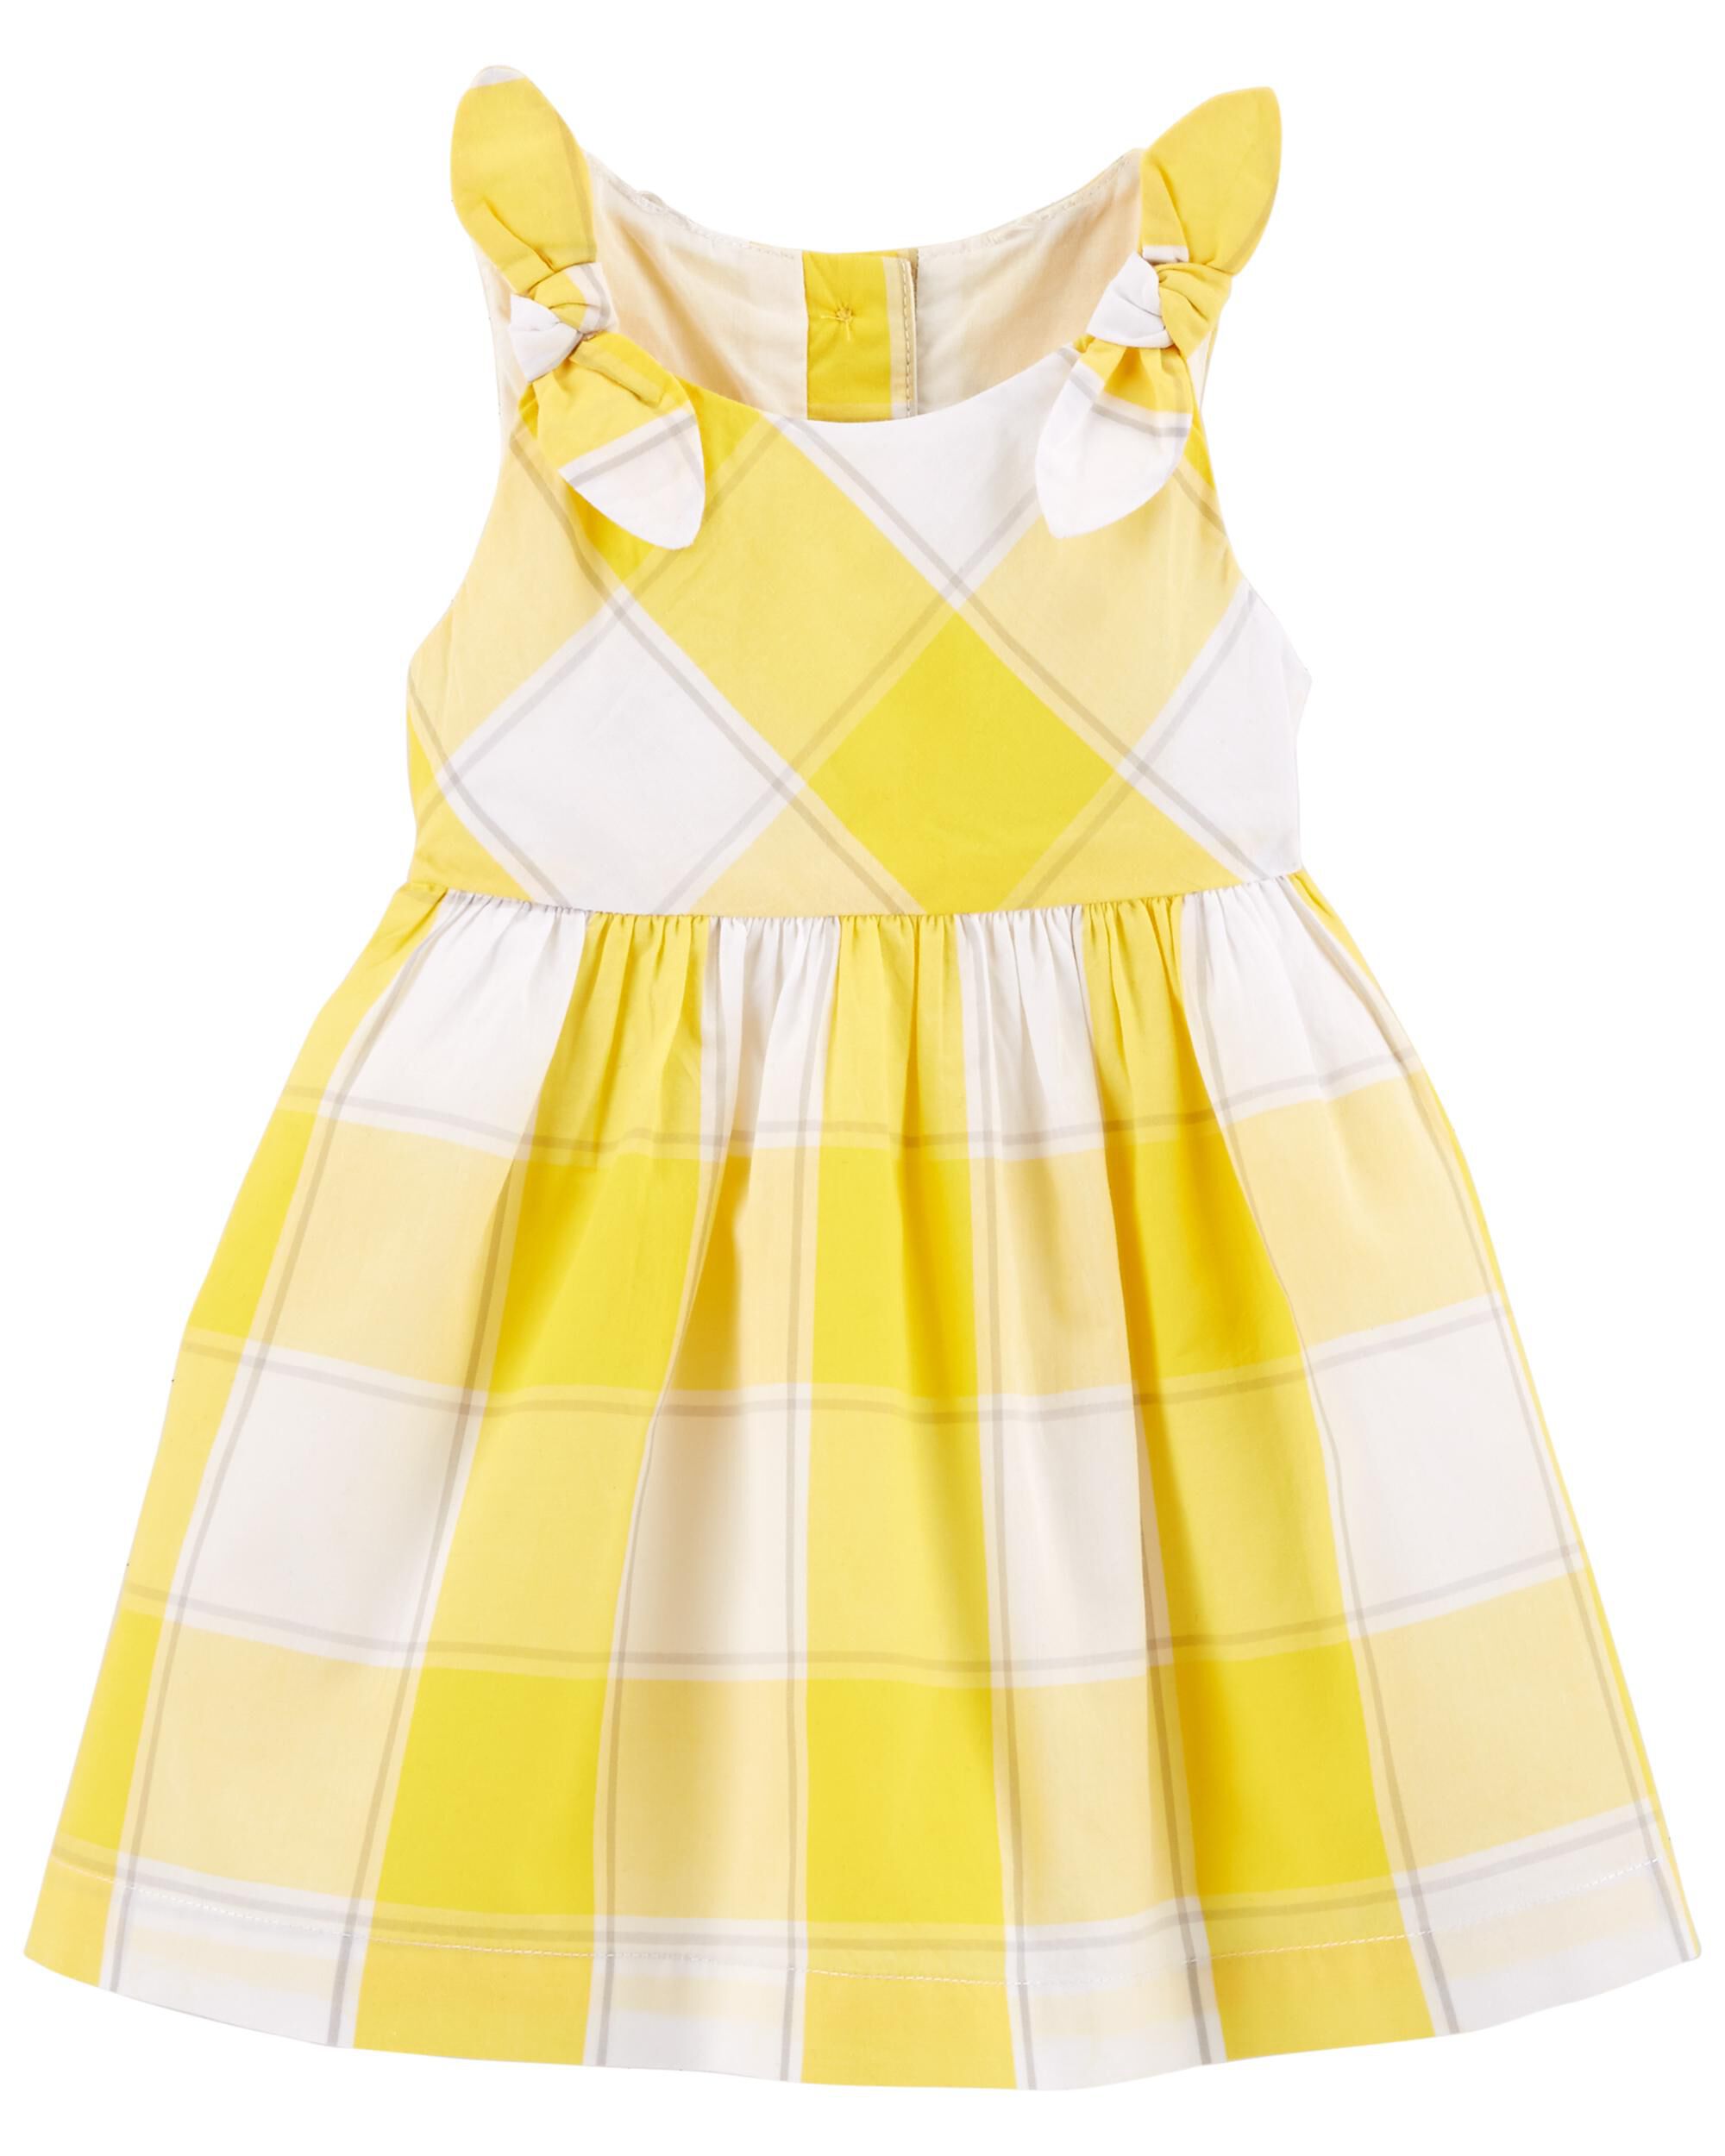 Checkered Dress | OshKosh.com